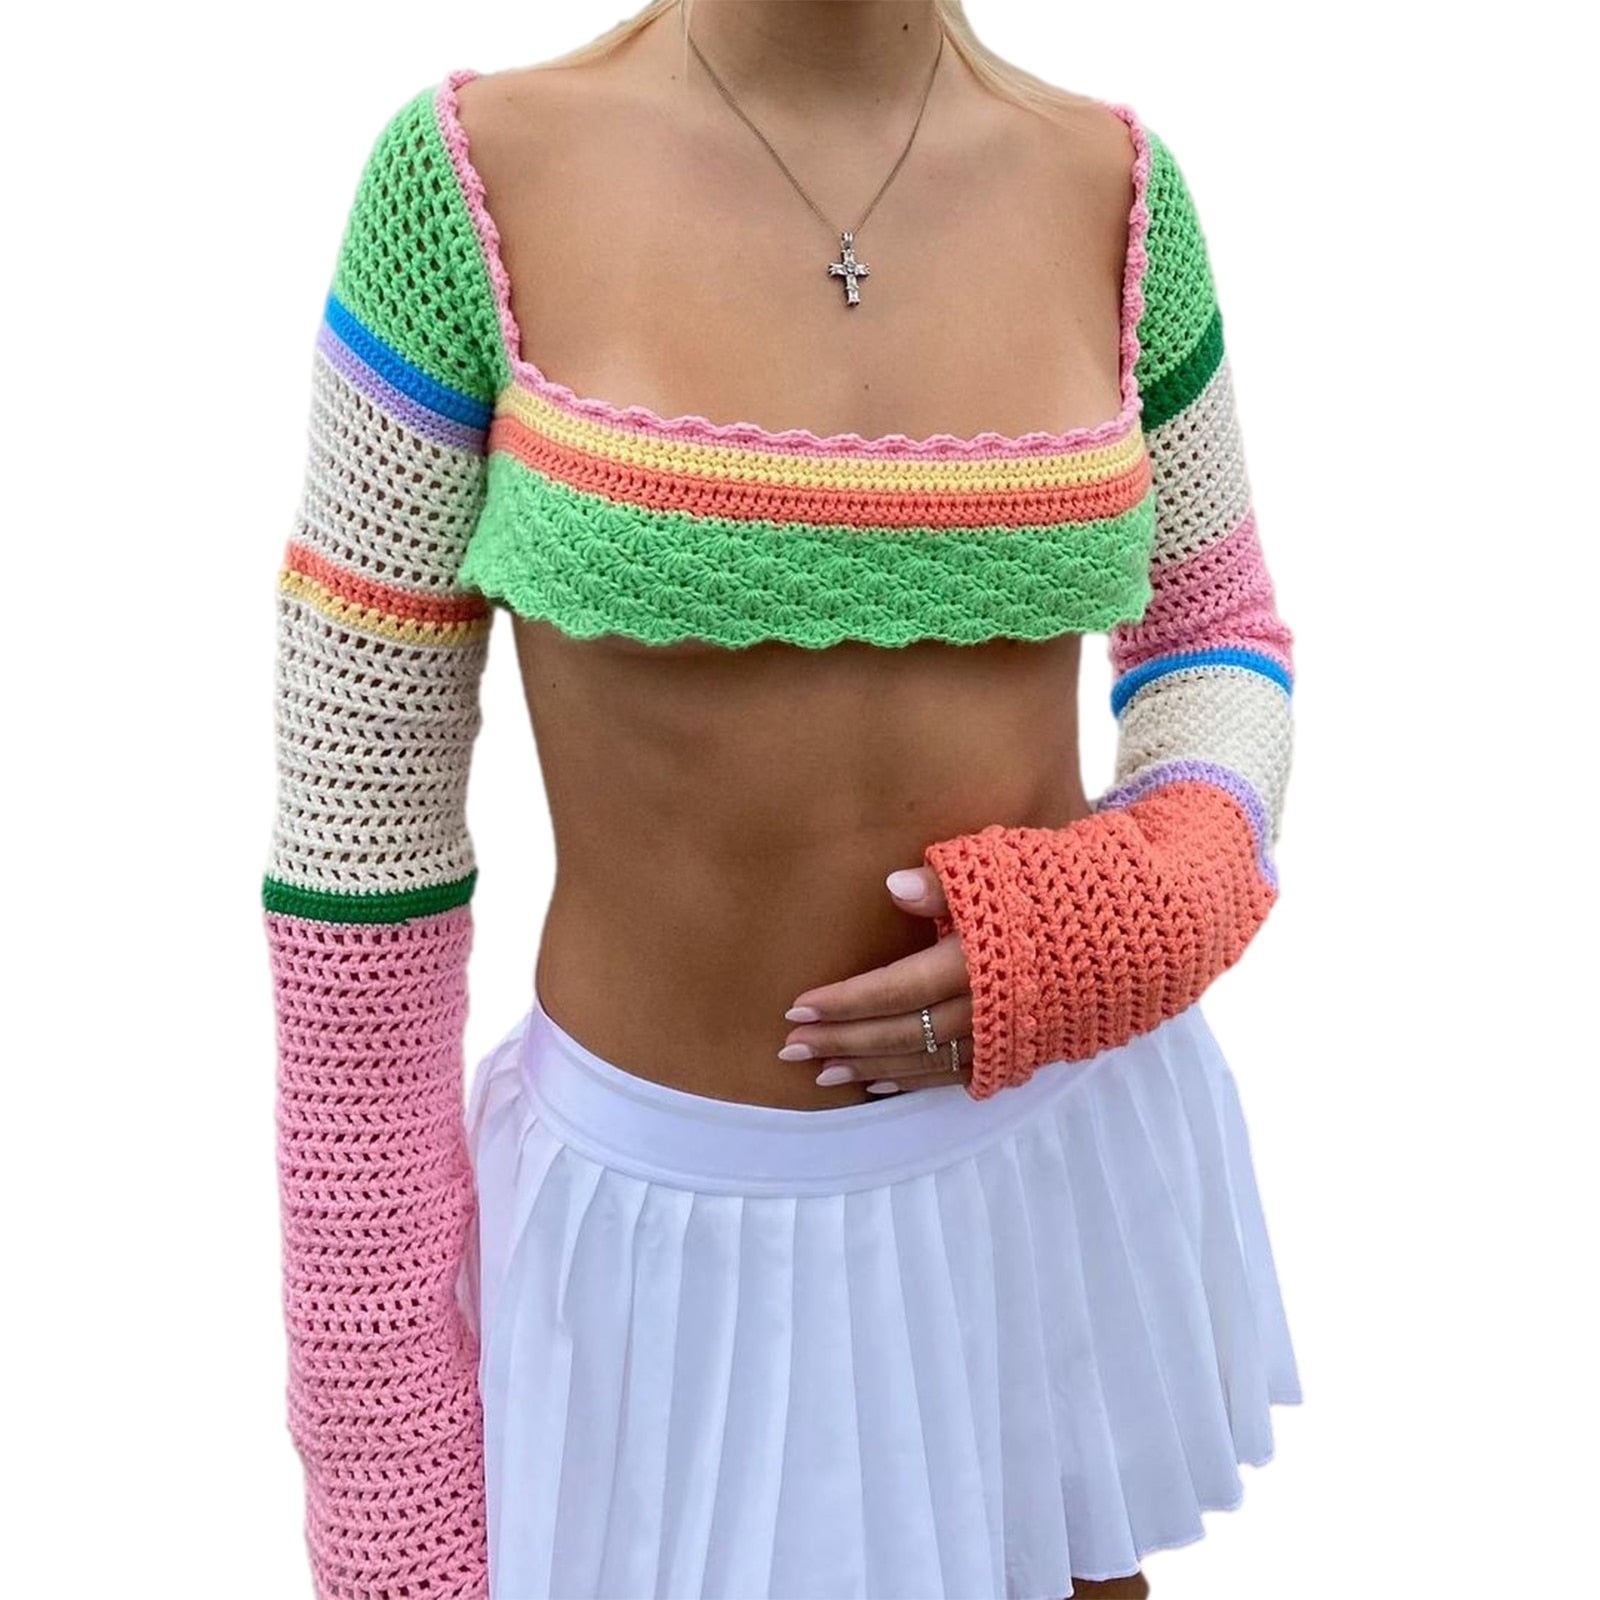 Knitted Crochet Sweater Crop Top - Top Boho